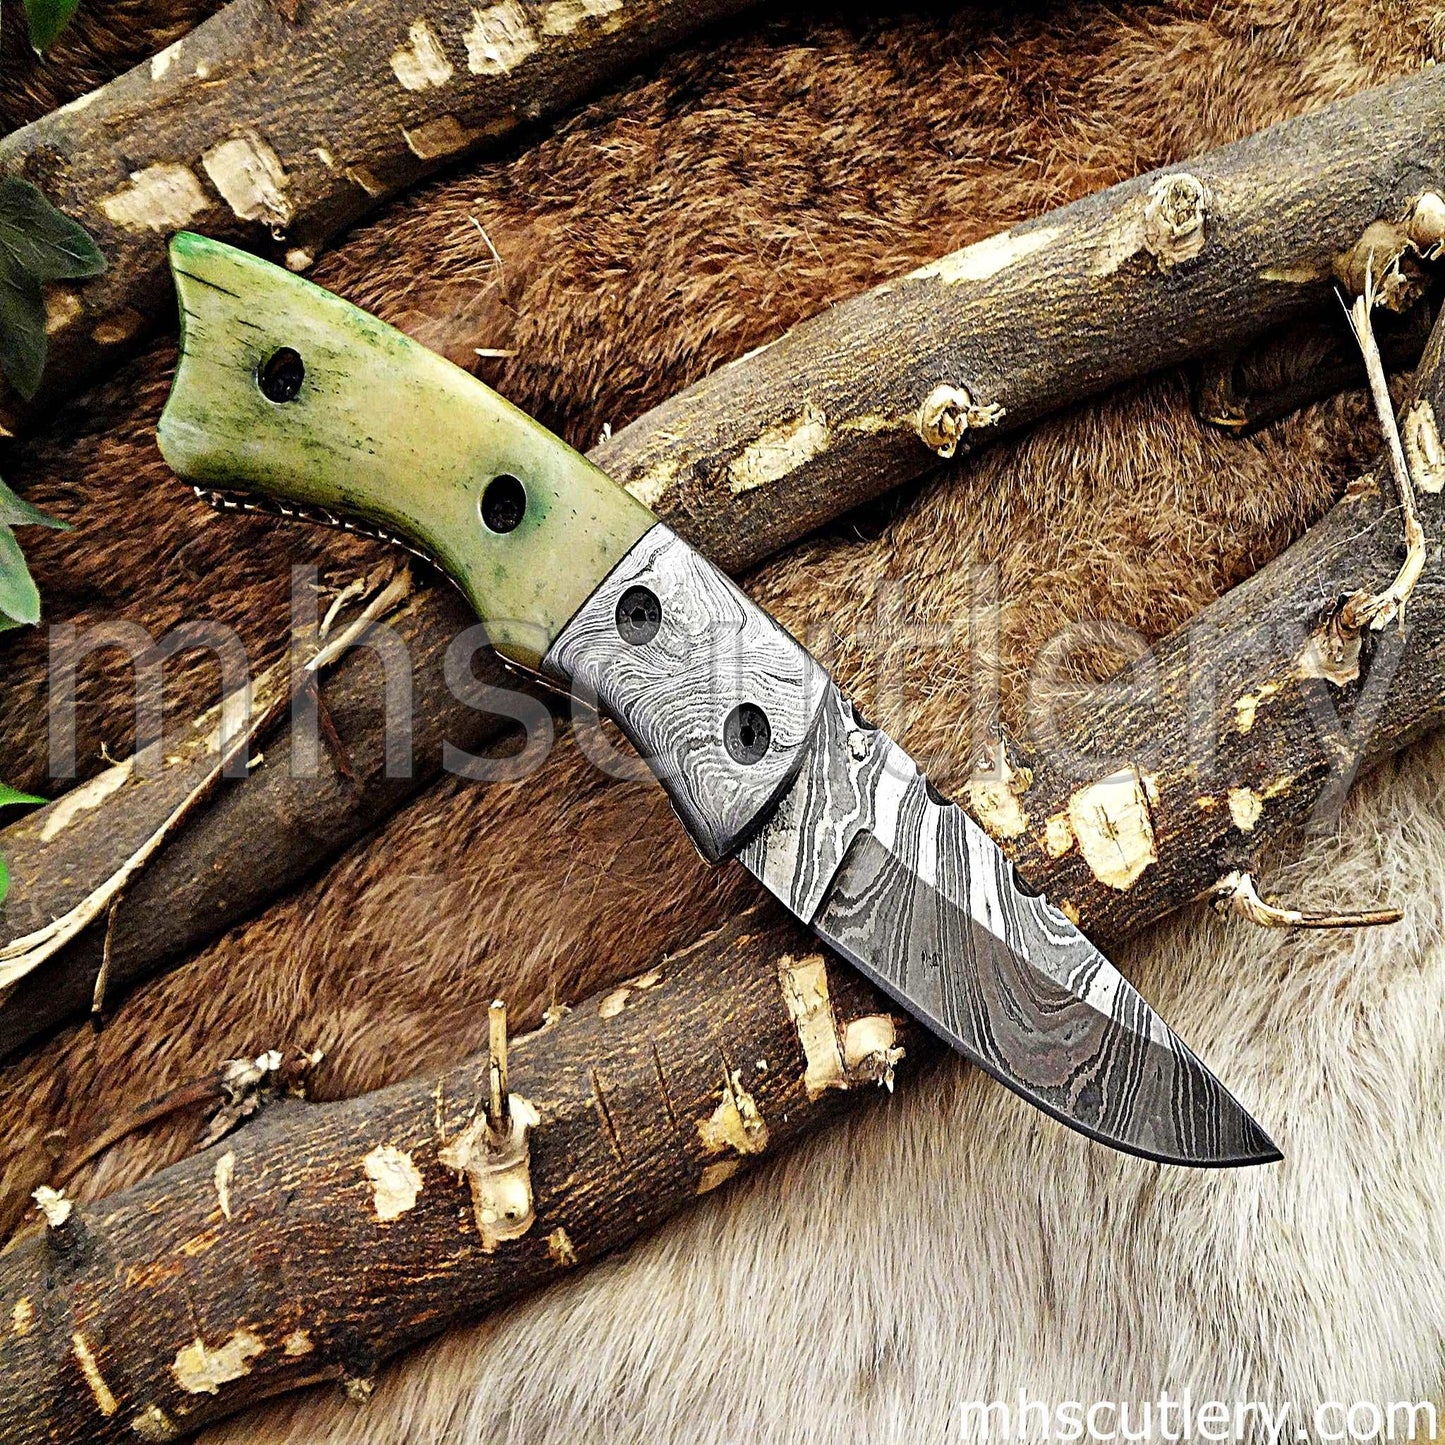 Custom Hand Forged Damascus Steel Folding Pocket Knife | mhscutlery